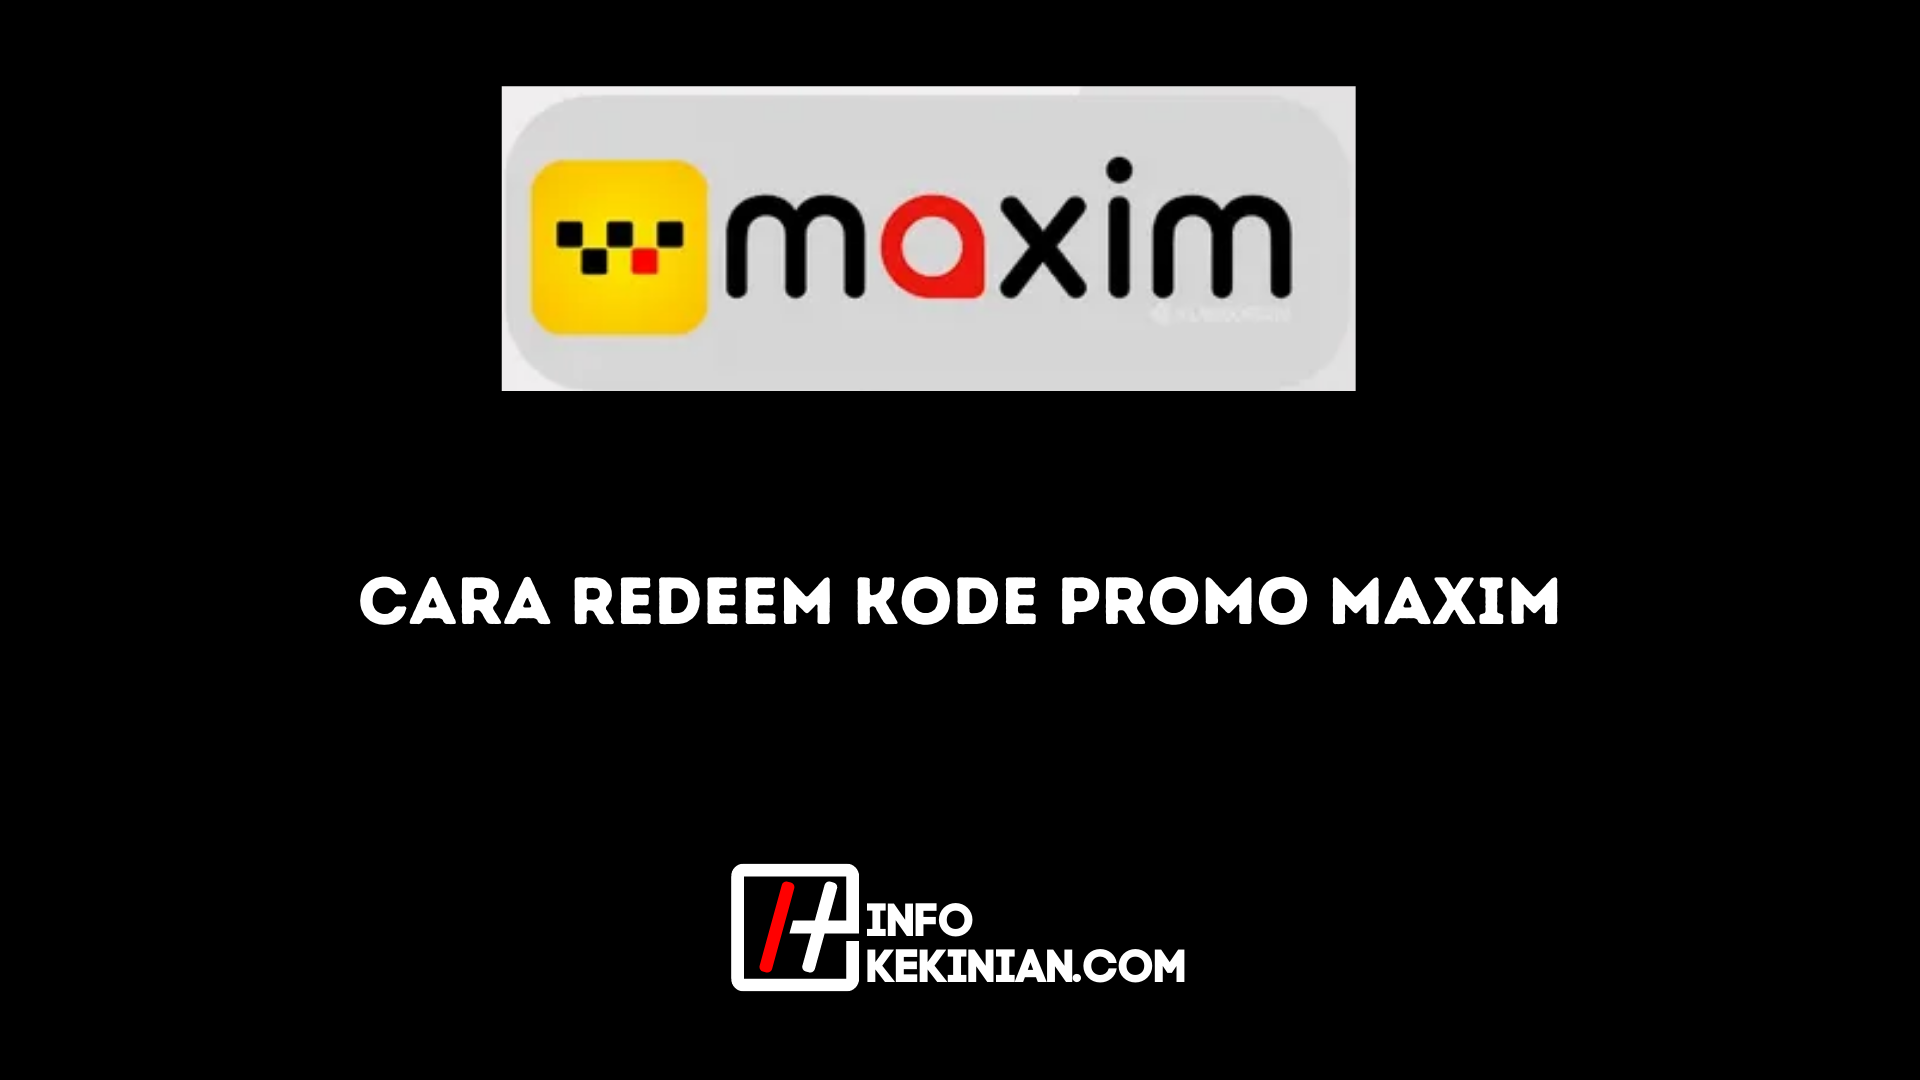 How to Redeem the Maxim Promo Code